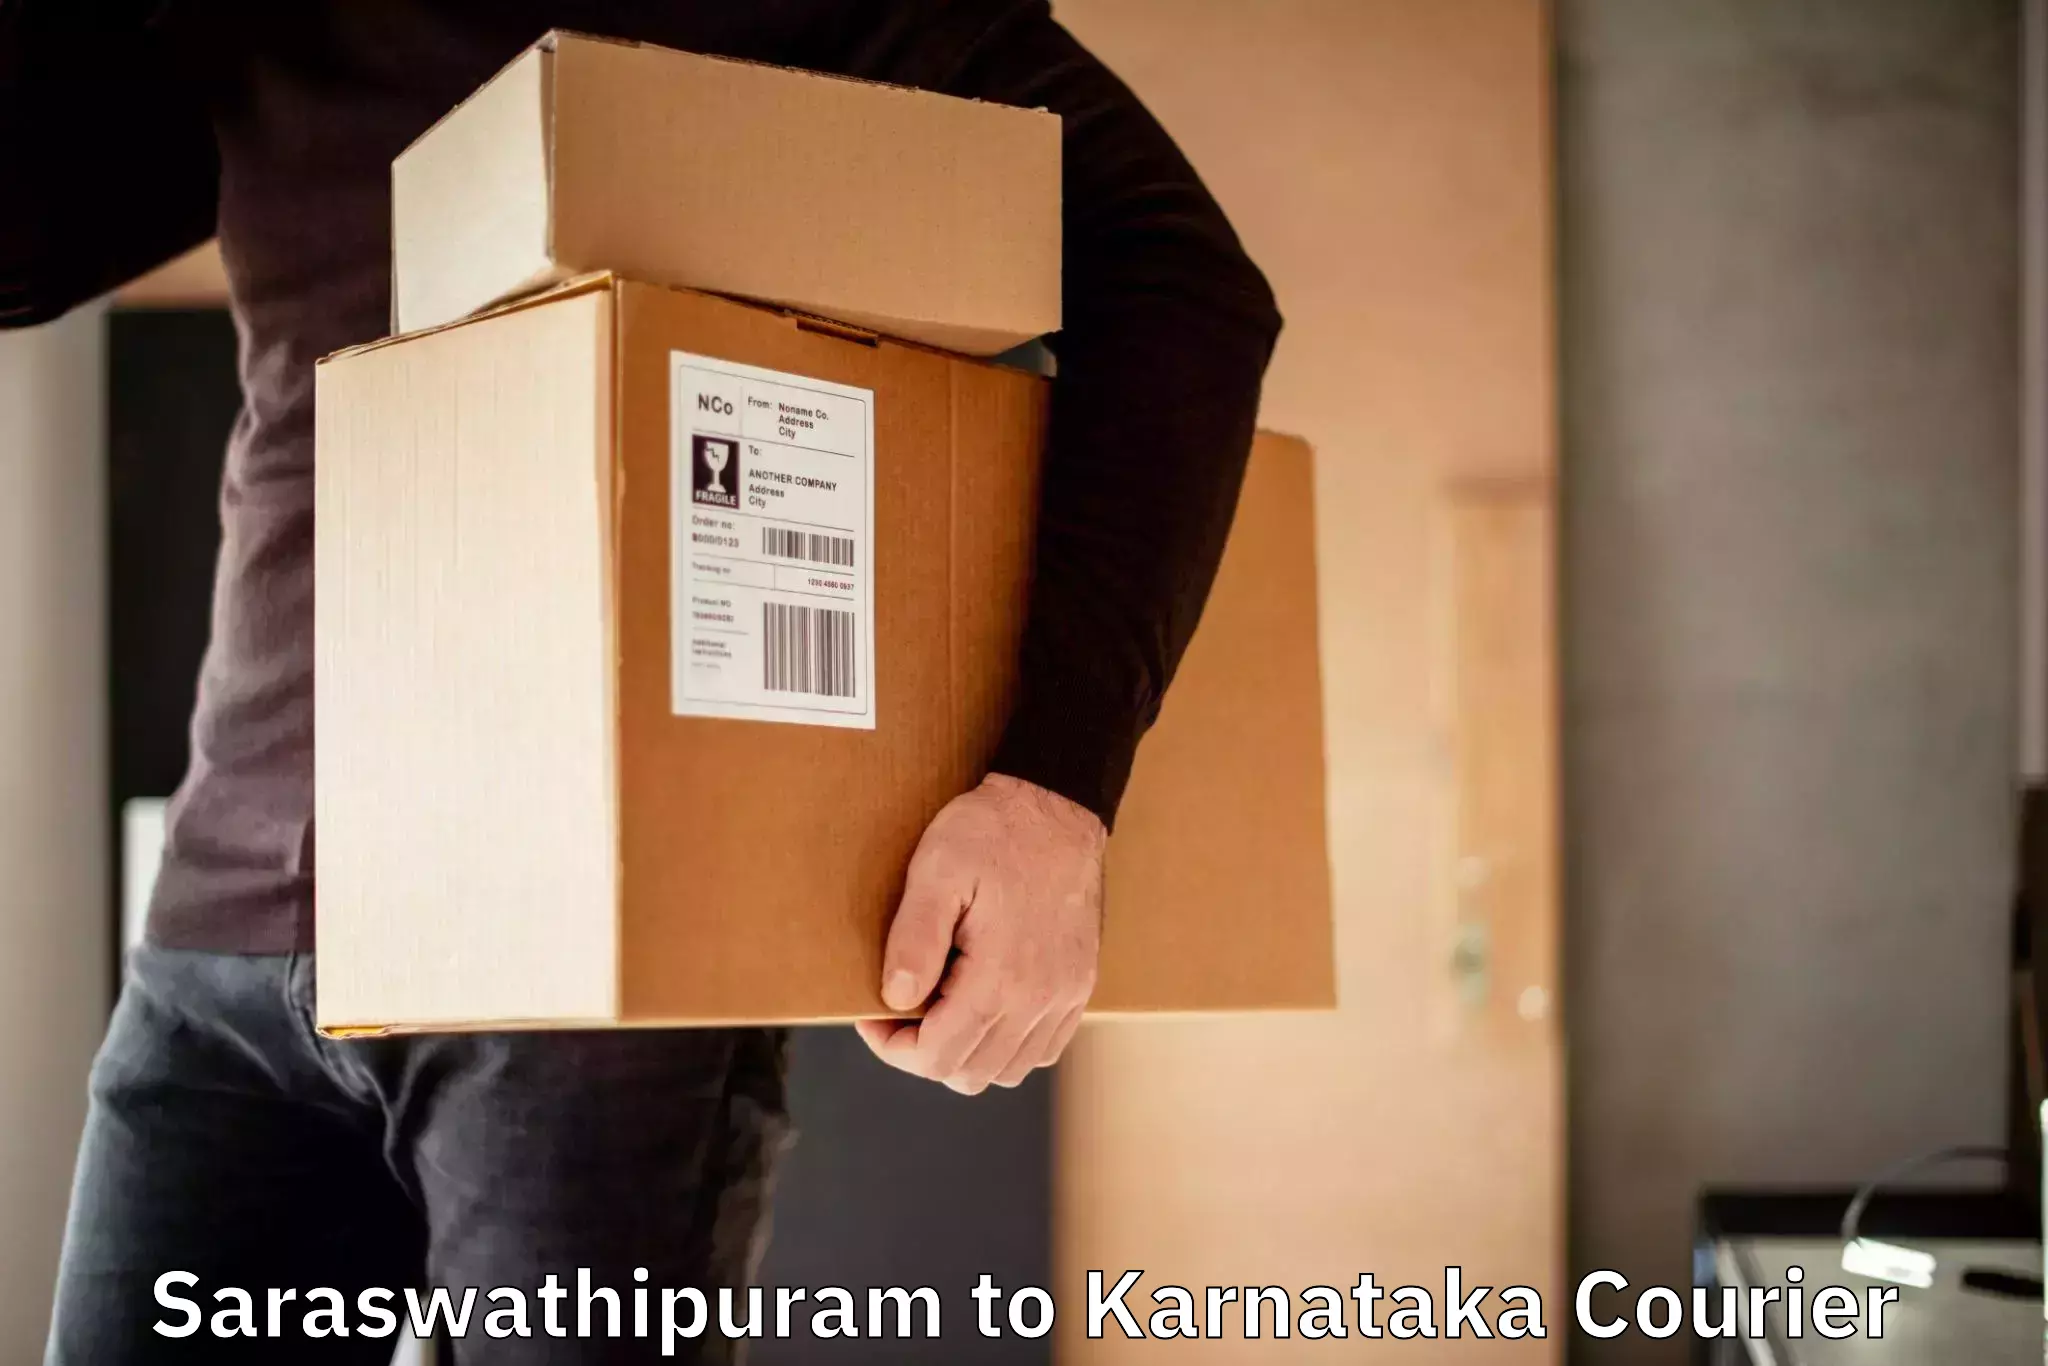 Reliable delivery network Saraswathipuram to Chikkamagaluru